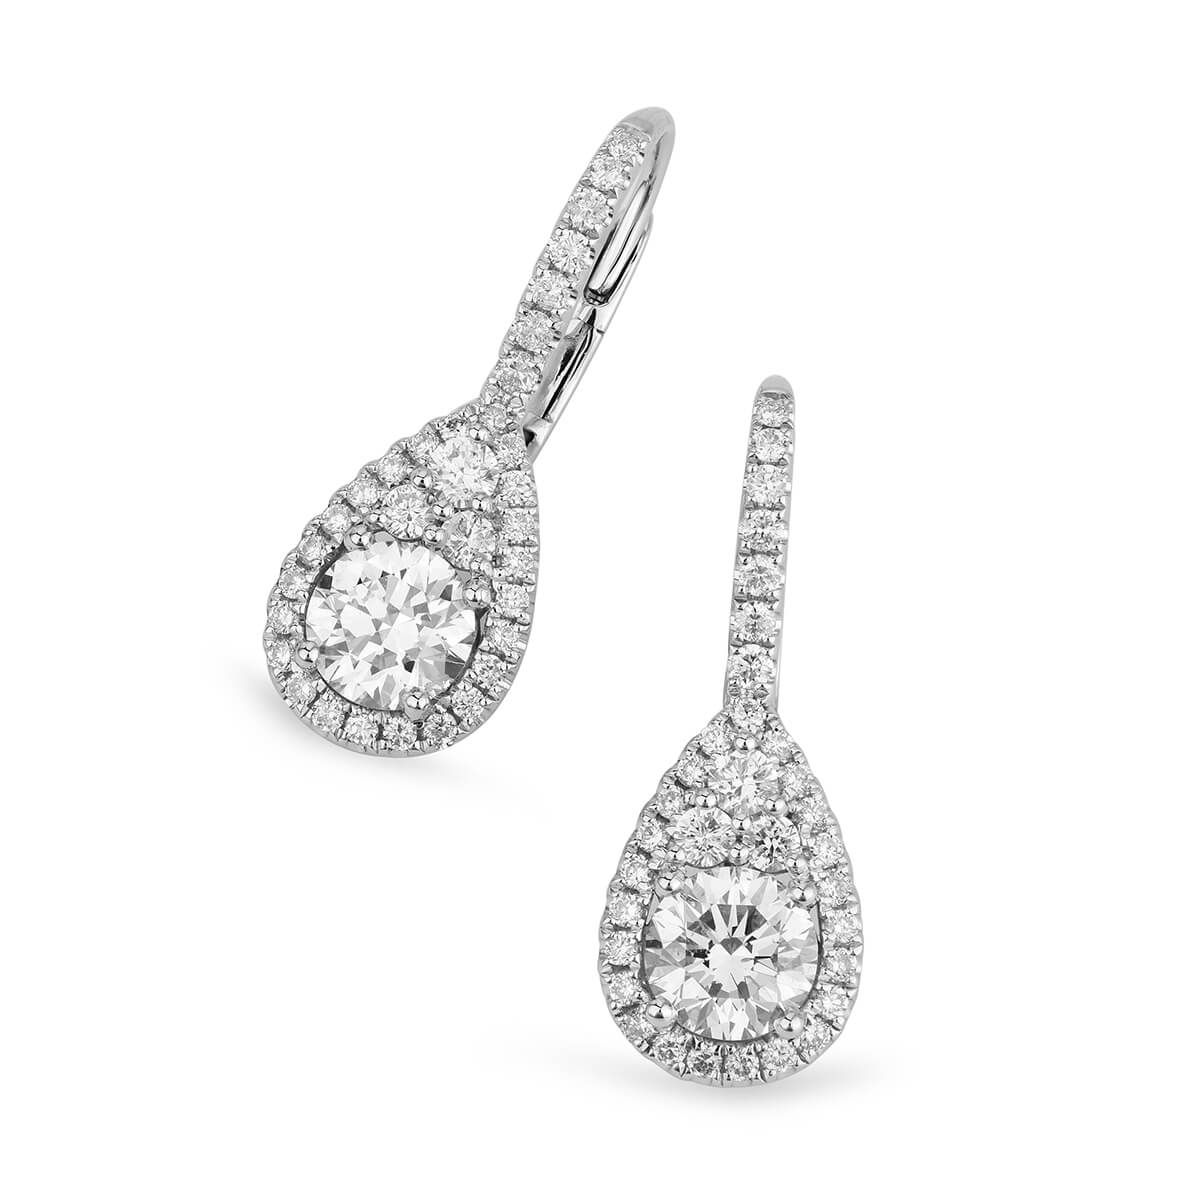  White Diamond Earrings, 1.53 Ct. TW, Round shape, EG_Lab Certified, J5826174639